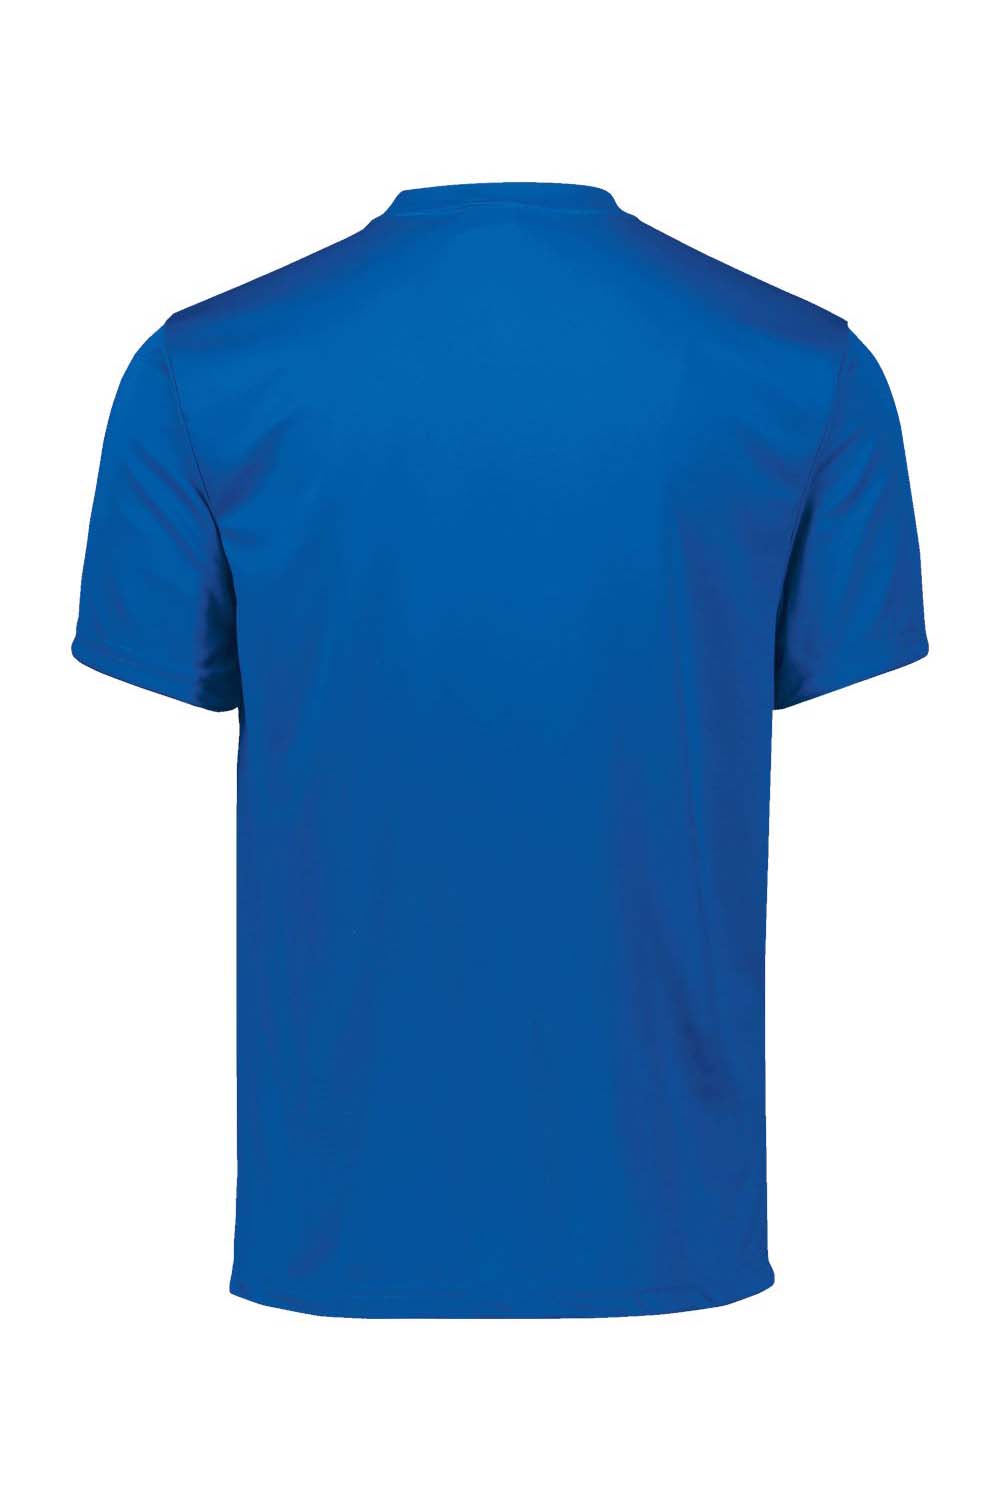 Augusta Sportswear 790 Mens Moisture Wicking Short Sleeve Crewneck T-Shirt Royal Blue Model Flat Back